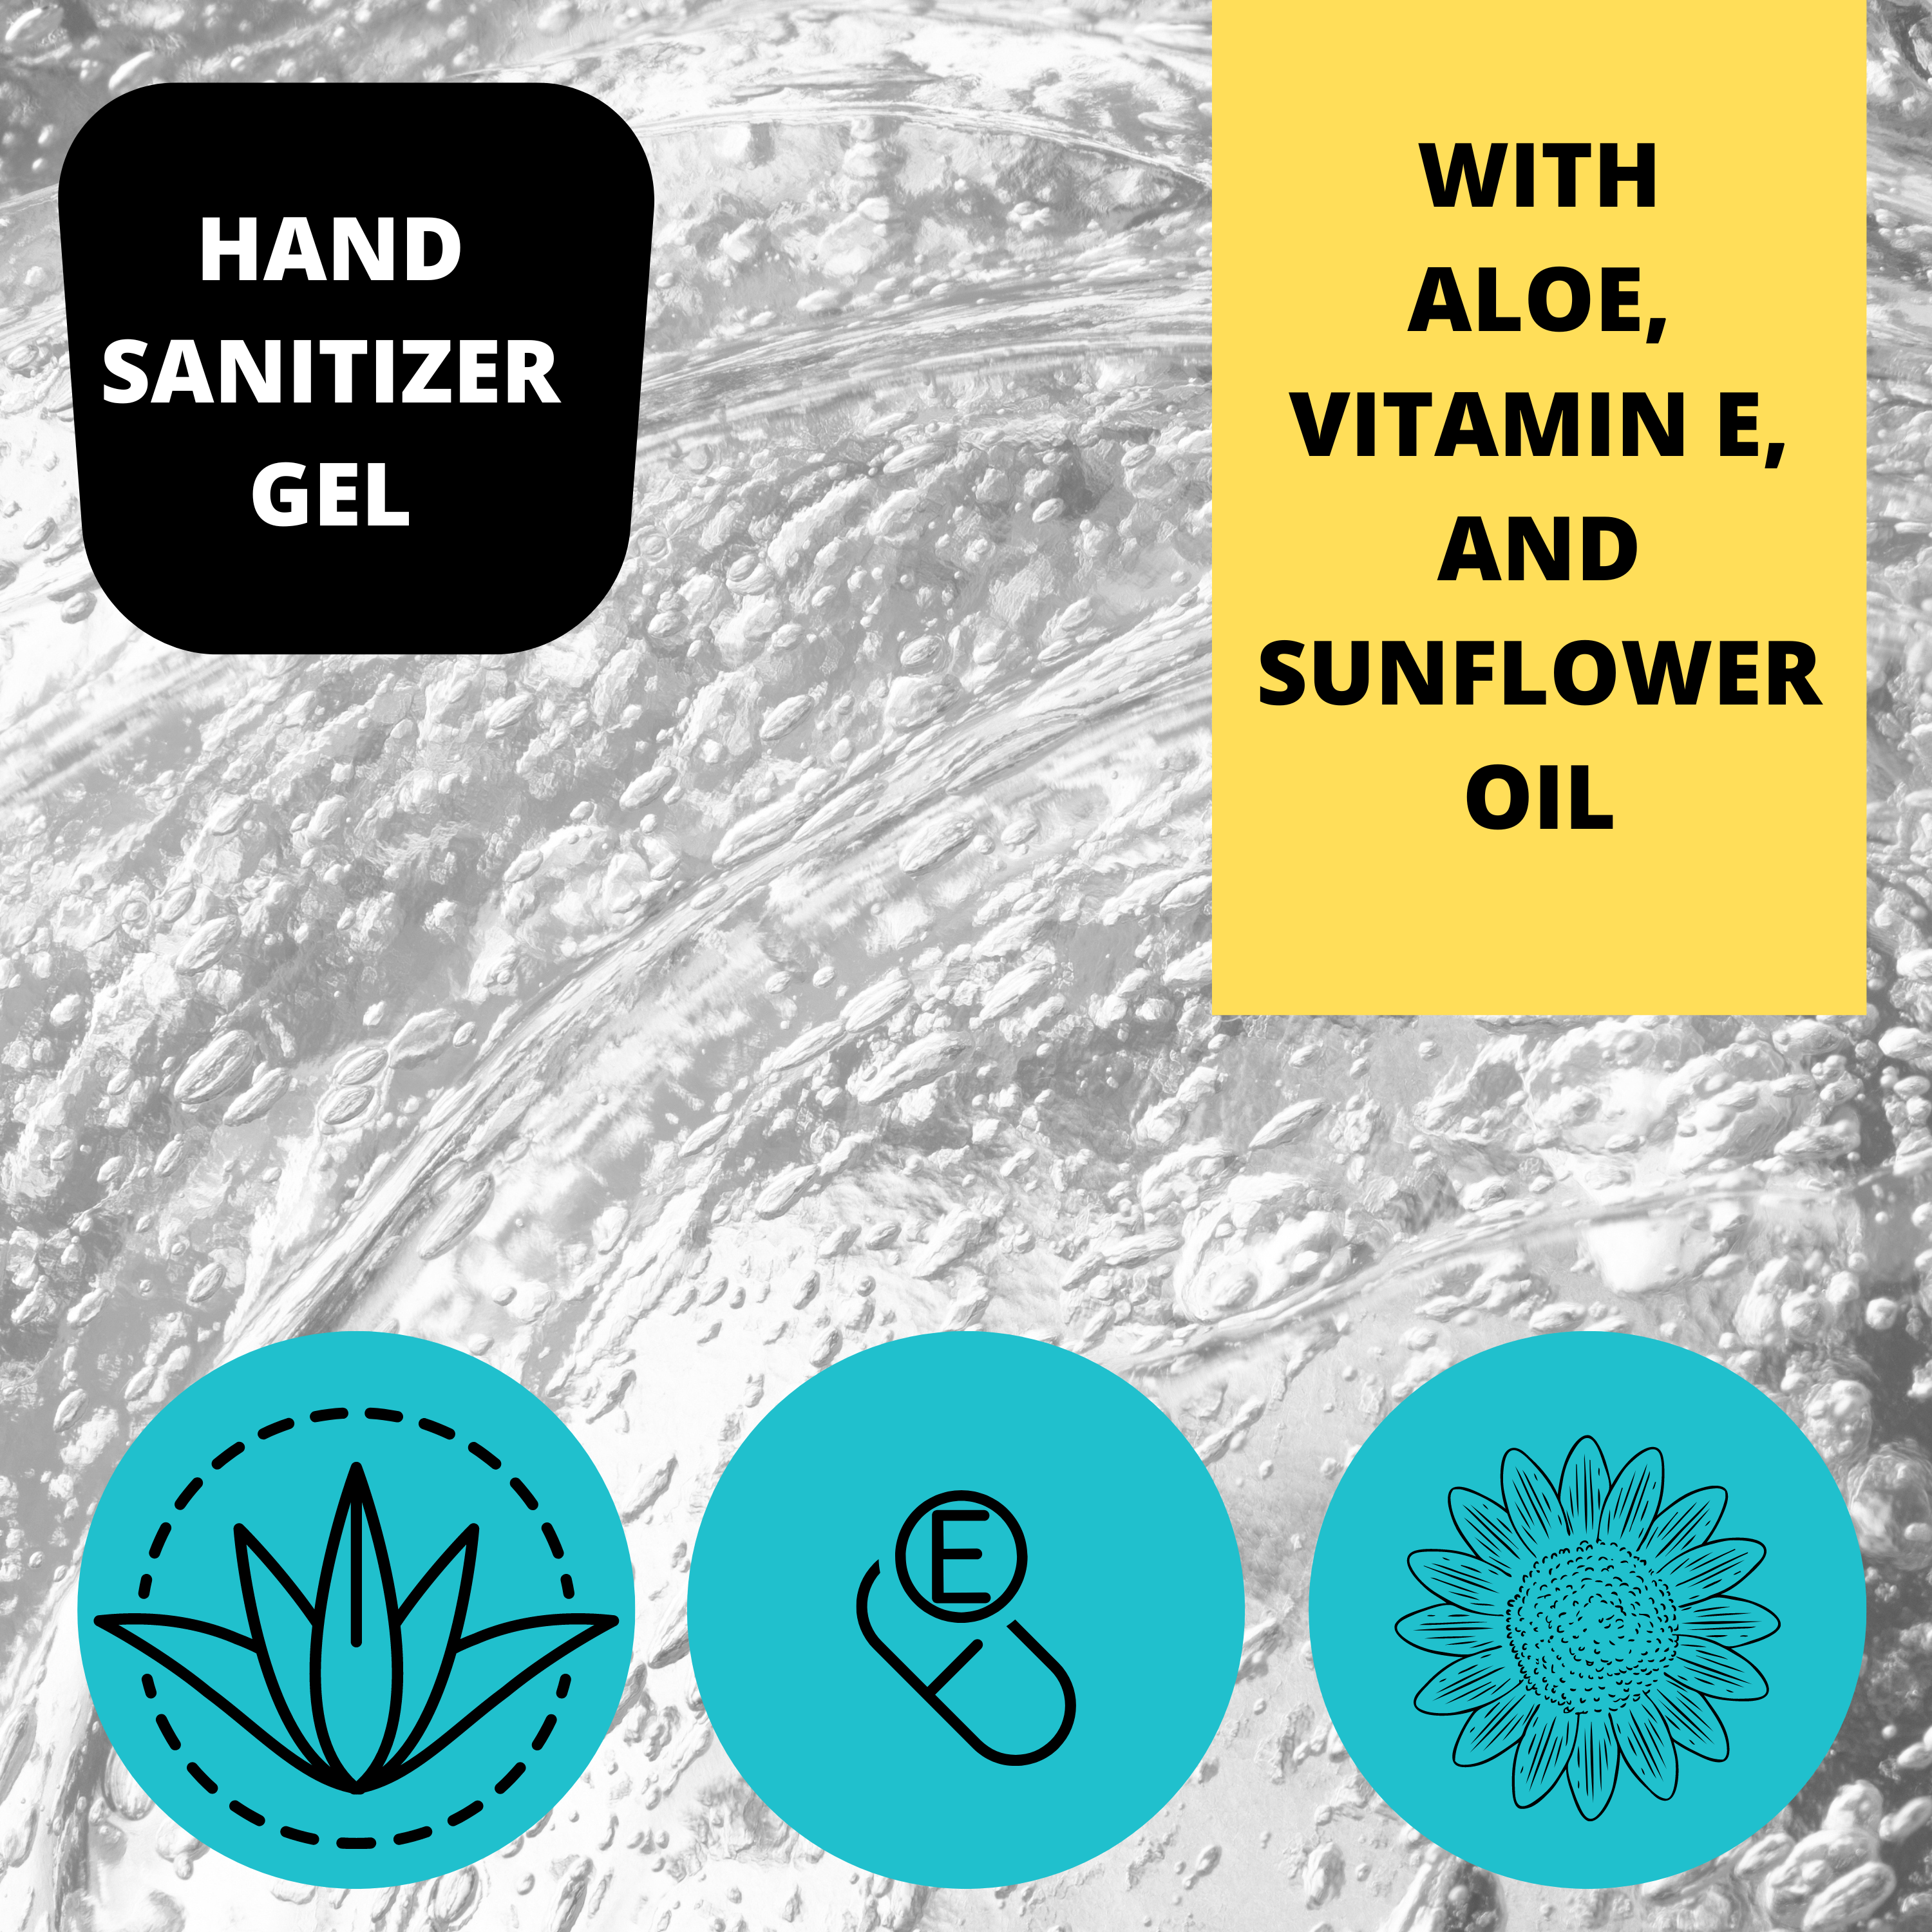 Black Canyon Bamboo & Tea Scented Hand Sanitizer Gel